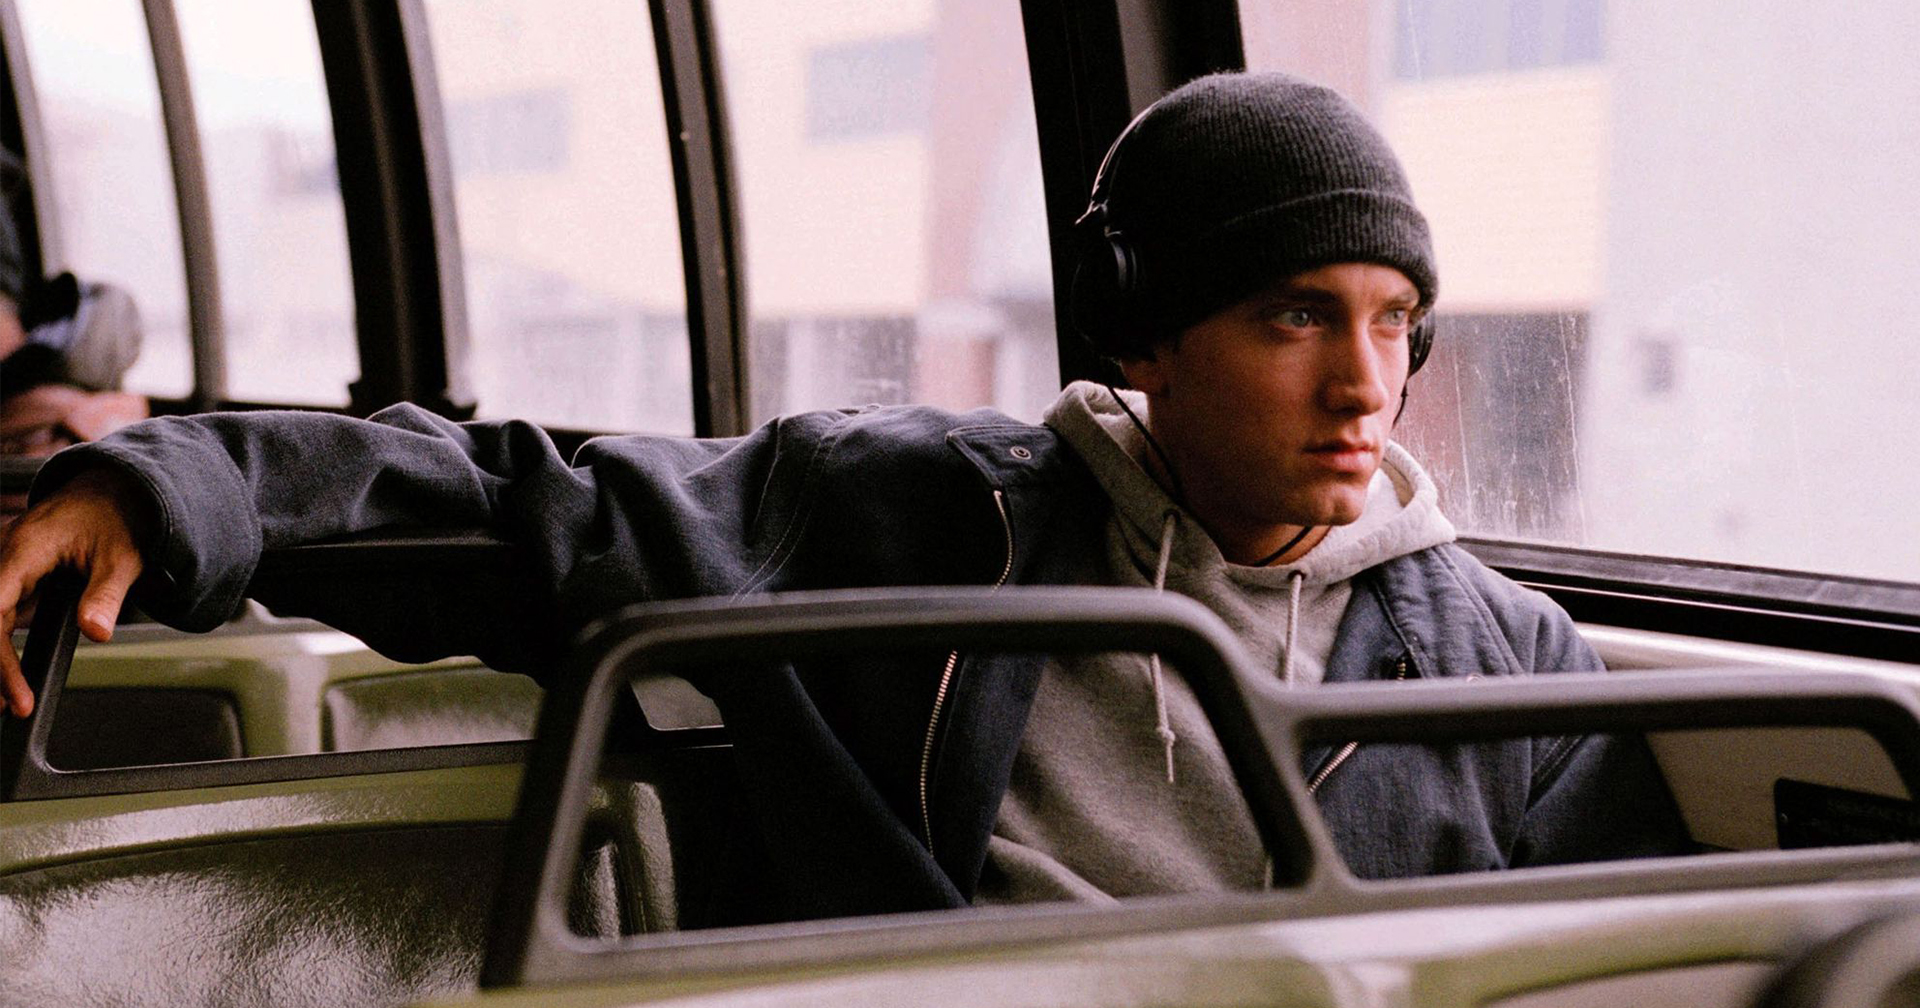 Eminem แต่งเพลง “Lose Yourself” ระหว่างพักกองหนัง ‘8 Mile’ และบันทึกเสียงจบในเทกเดียว